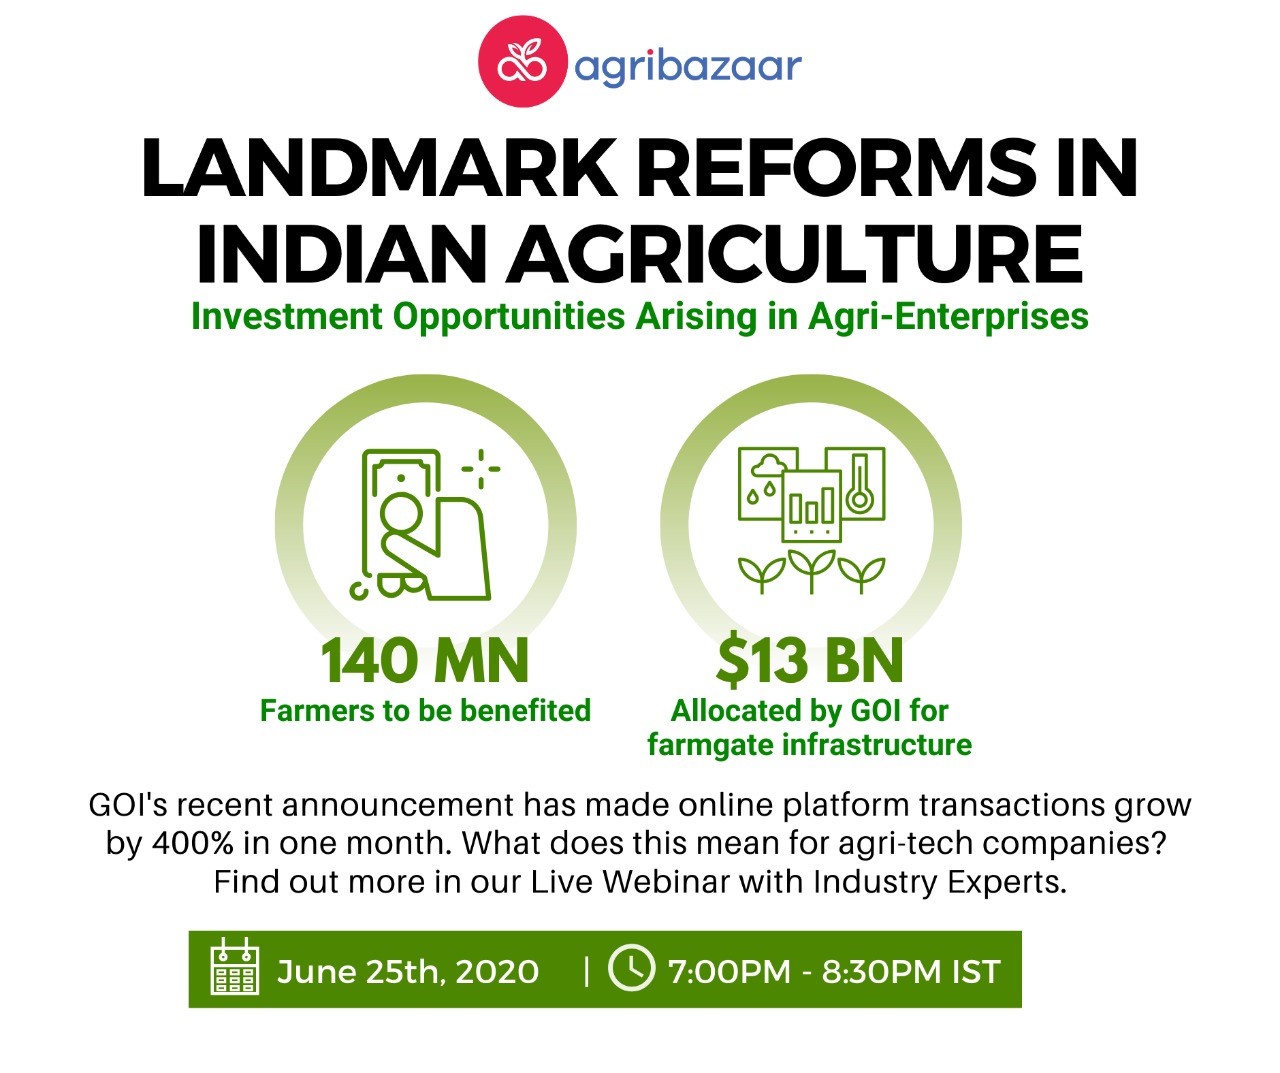 Live Webinar on "Landmark Reforms in Indian Agriculture" on 25th June 2020